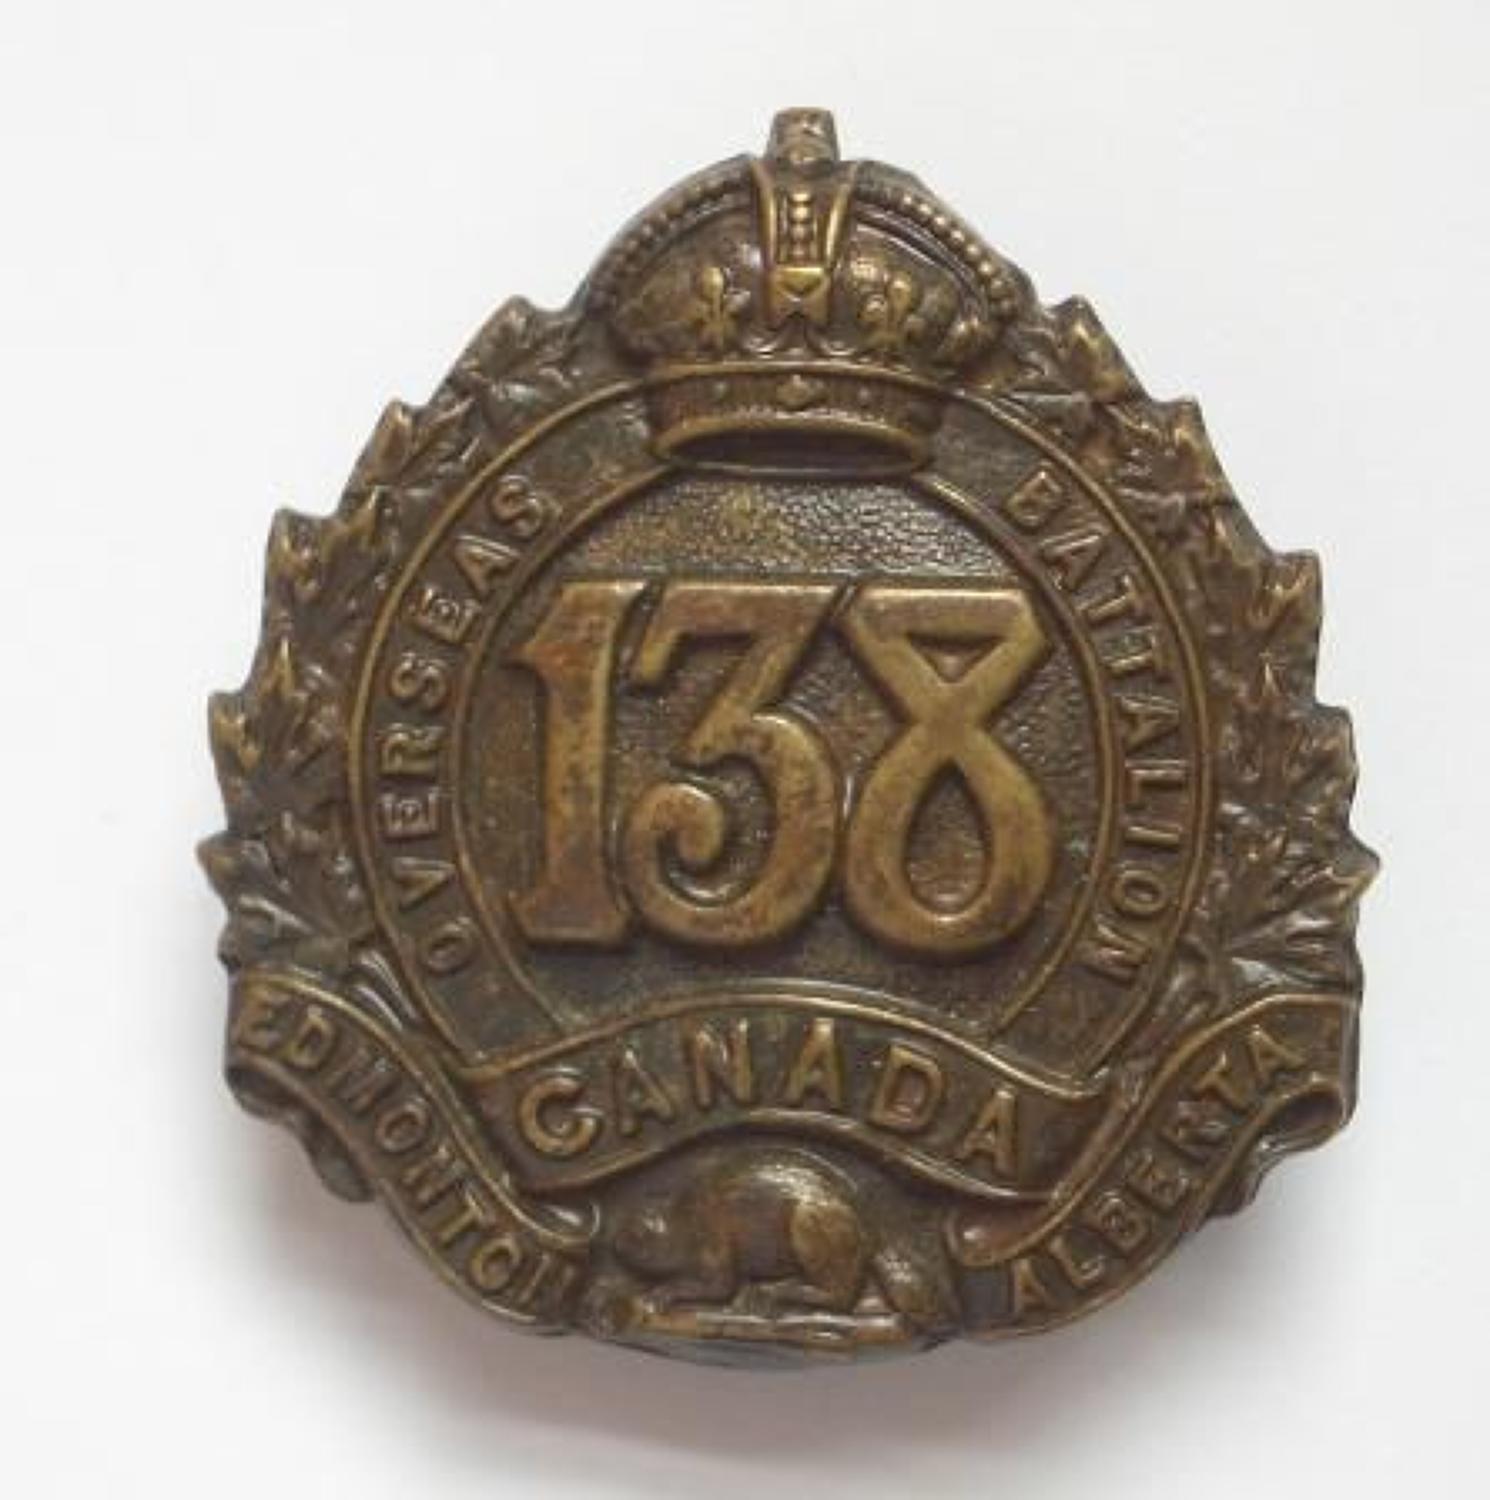 Canadian 138th (Edmonton) Bn. CEF WW1 cap Badge by Jackson Bros.